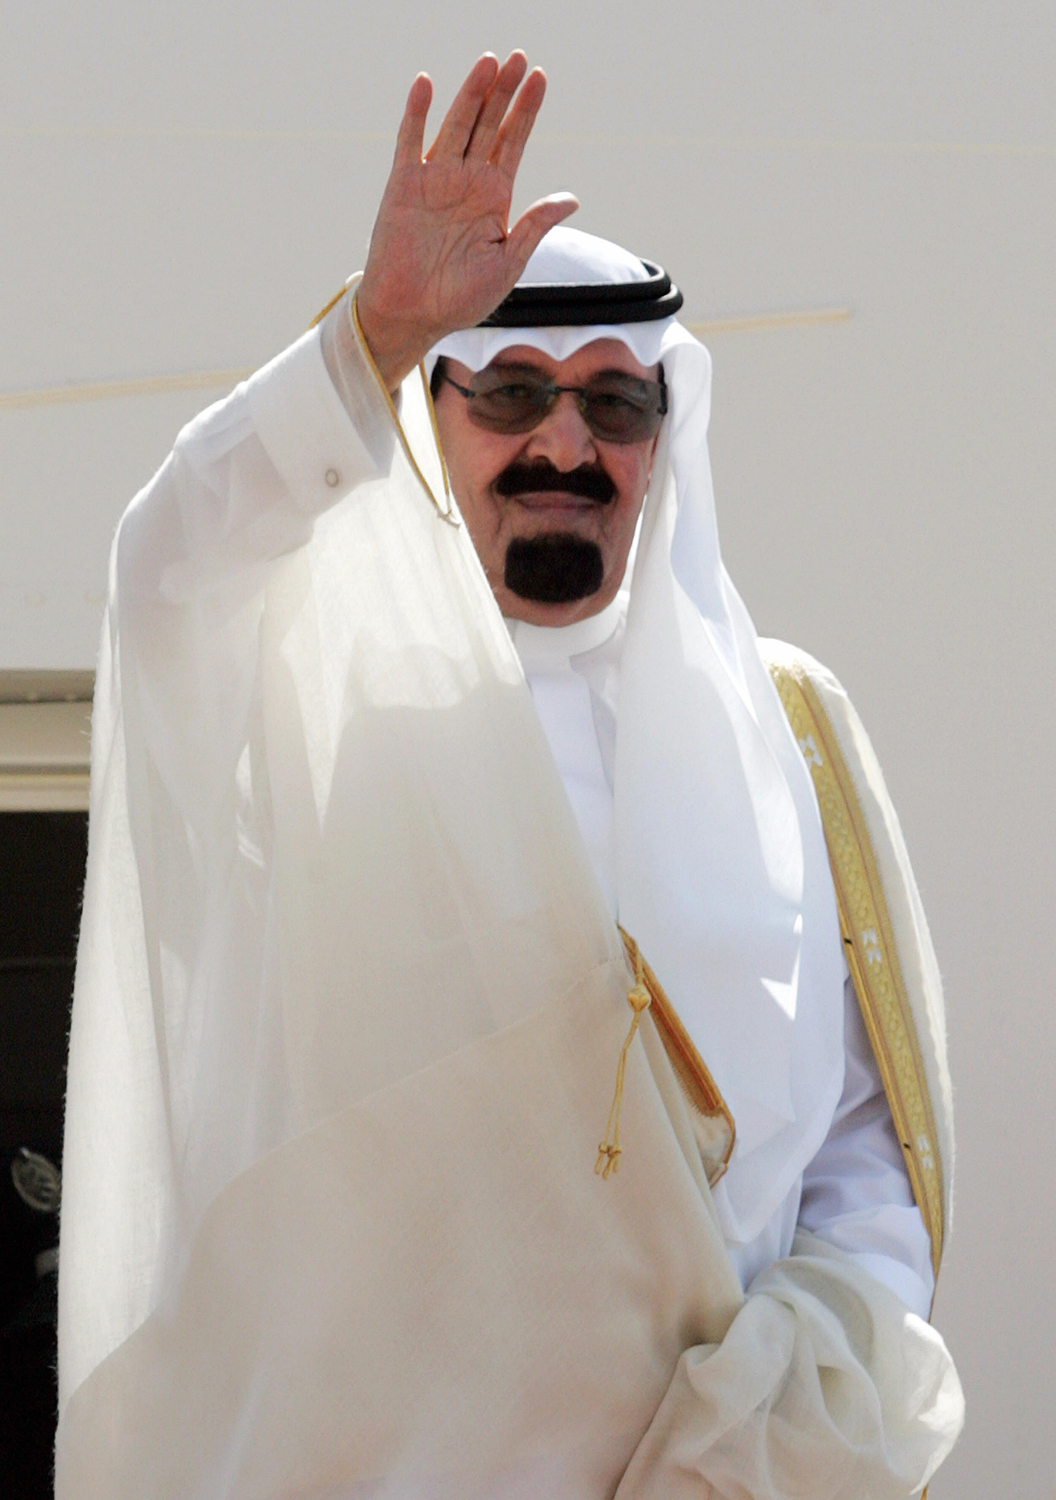 Фахд ибн Абдул-Азиз. Абдалла ибн Абдул-Азиз Аль Сауд. Король Фахд в Саудовской Аравии. Принц Сауд Бин Абдалла Бин. Фахд аль сауд